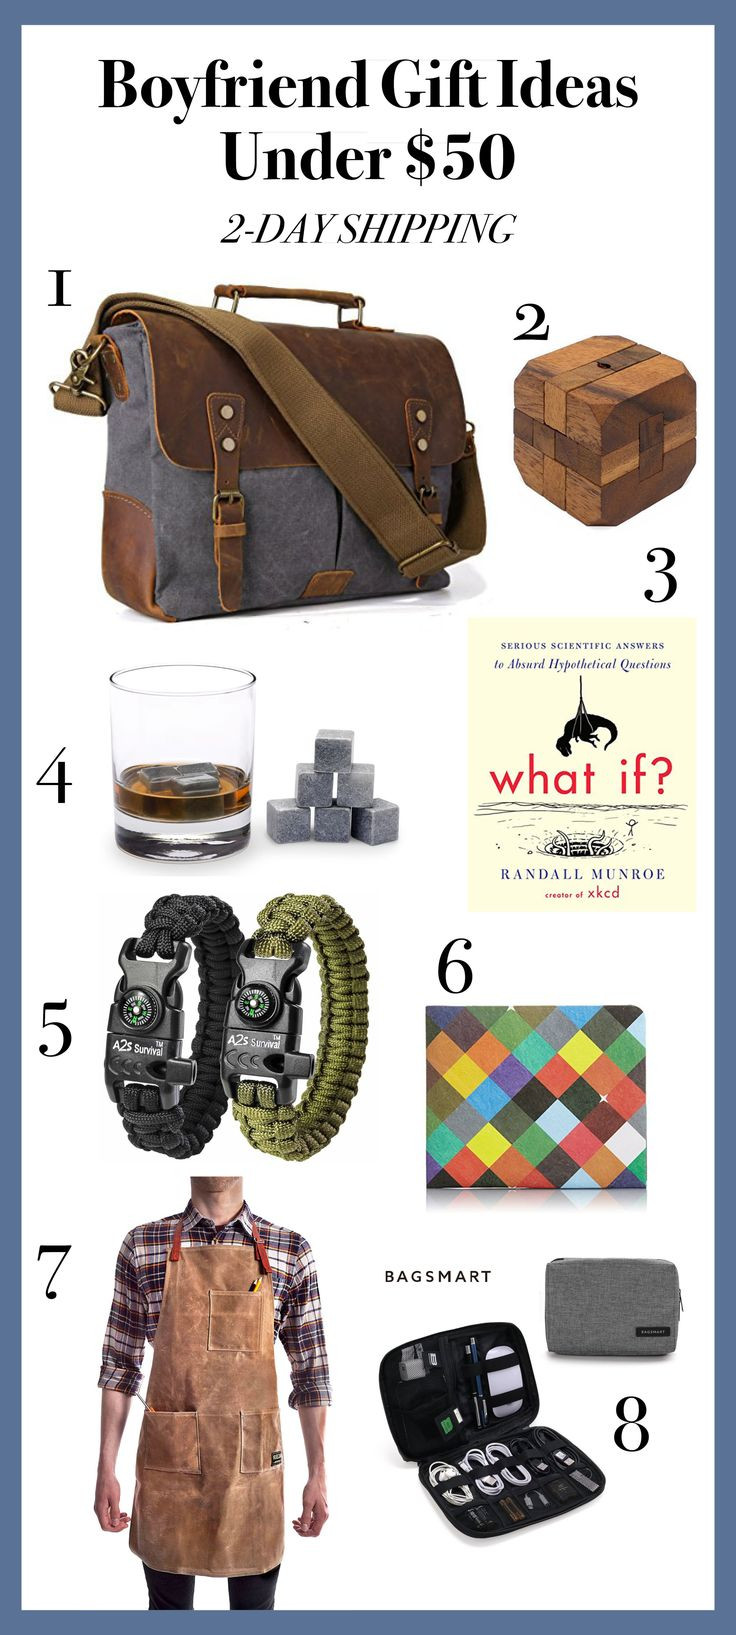 Nerd Gift Ideas For Boyfriend
 The 25 best Boyfriend t basket ideas on Pinterest